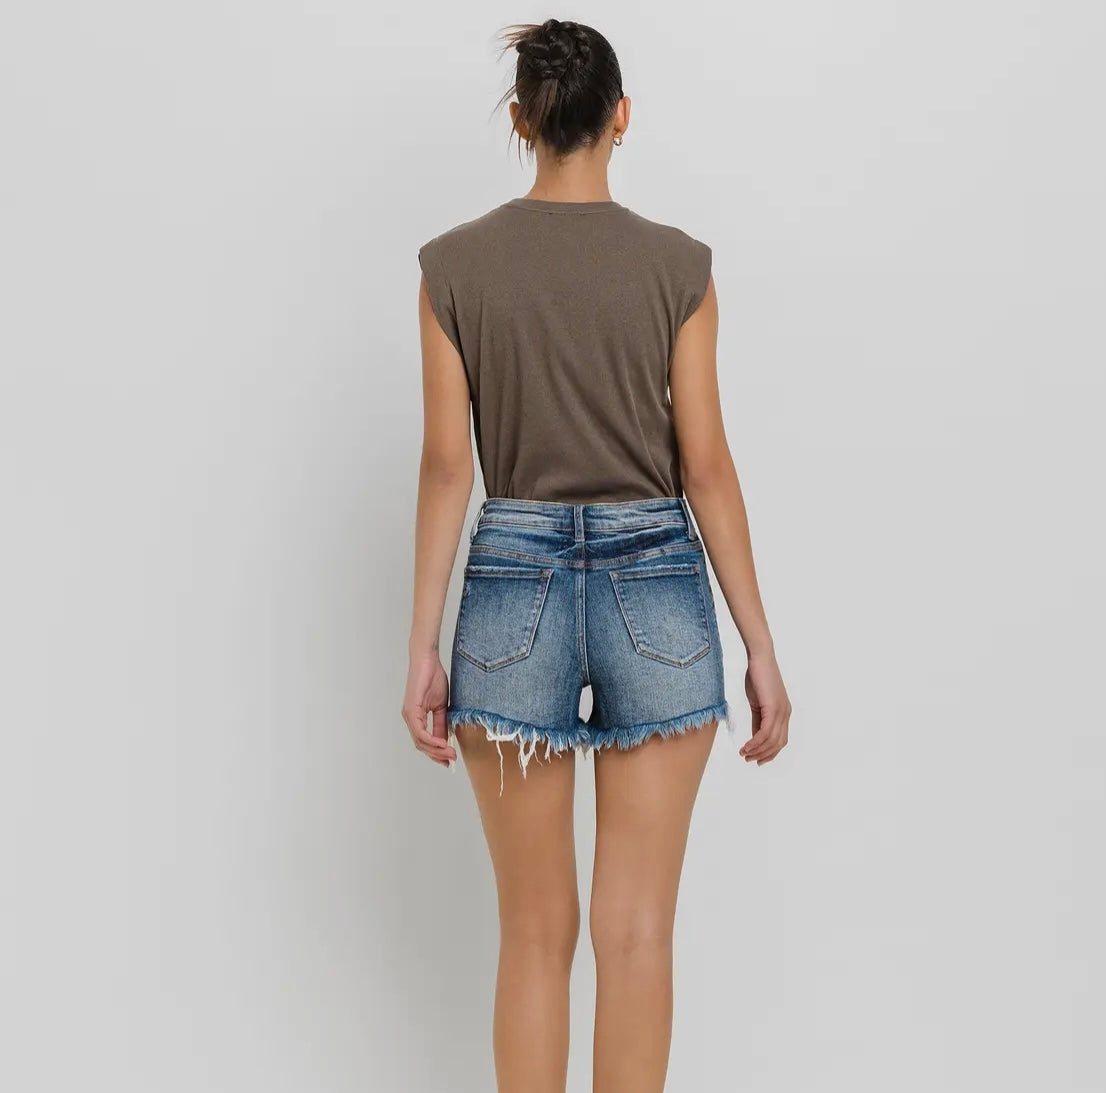 Carly's Fav Denim Shorts by Vervet